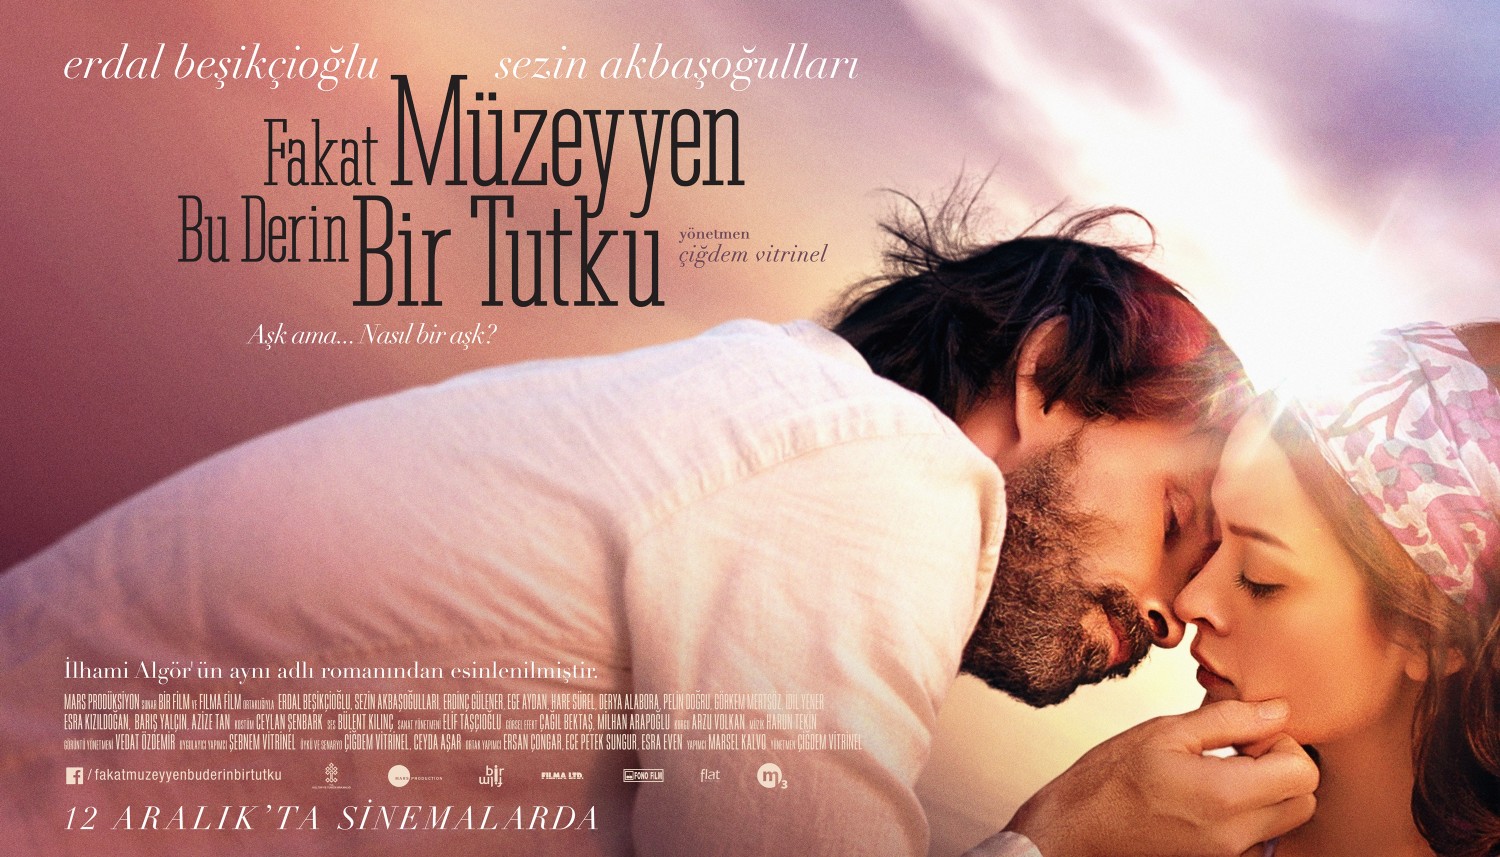 Extra Large Movie Poster Image for Fakat Müzeyyen Bu Derin Bir Tutku (#2 of 2)